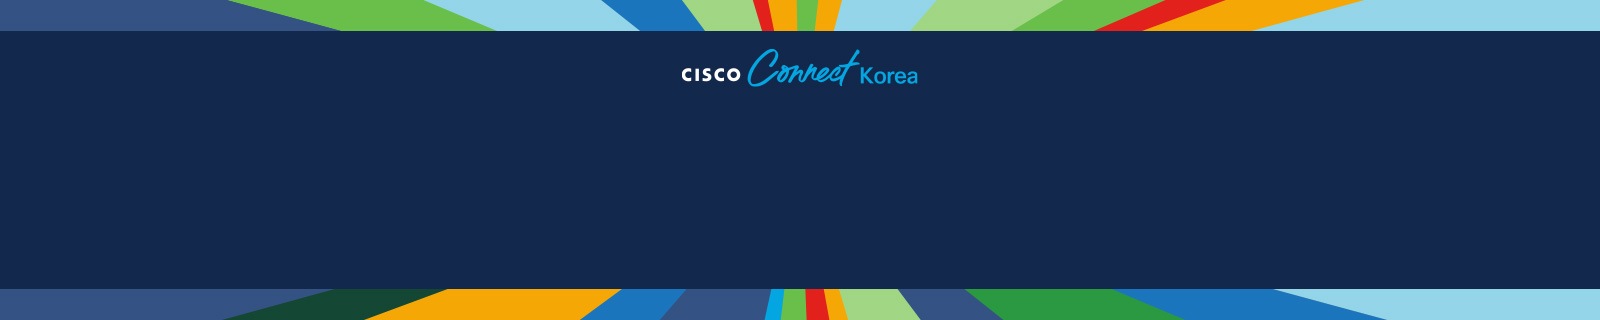 Korea cisco-connect-202205-c01-1600x320